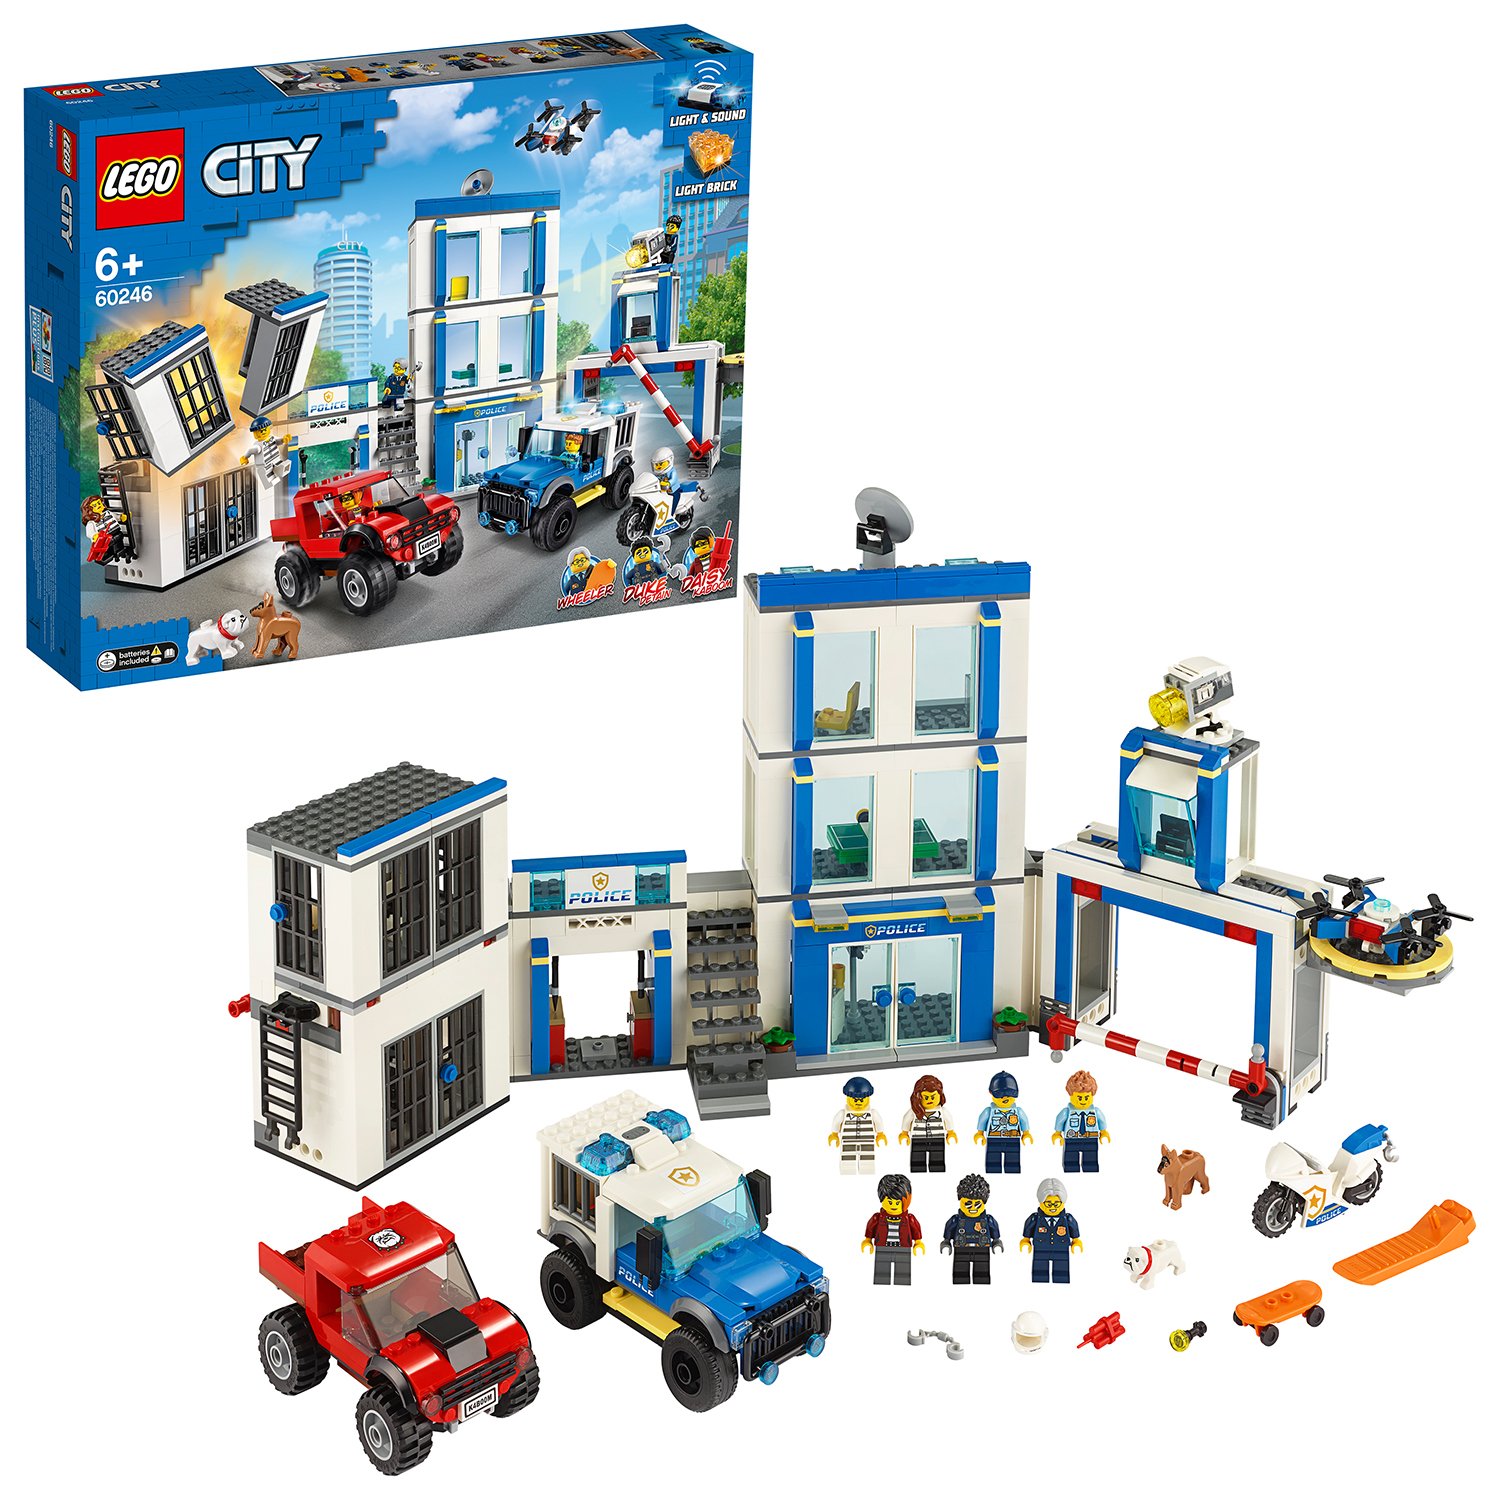 Buy LEGO City Police Station Building 